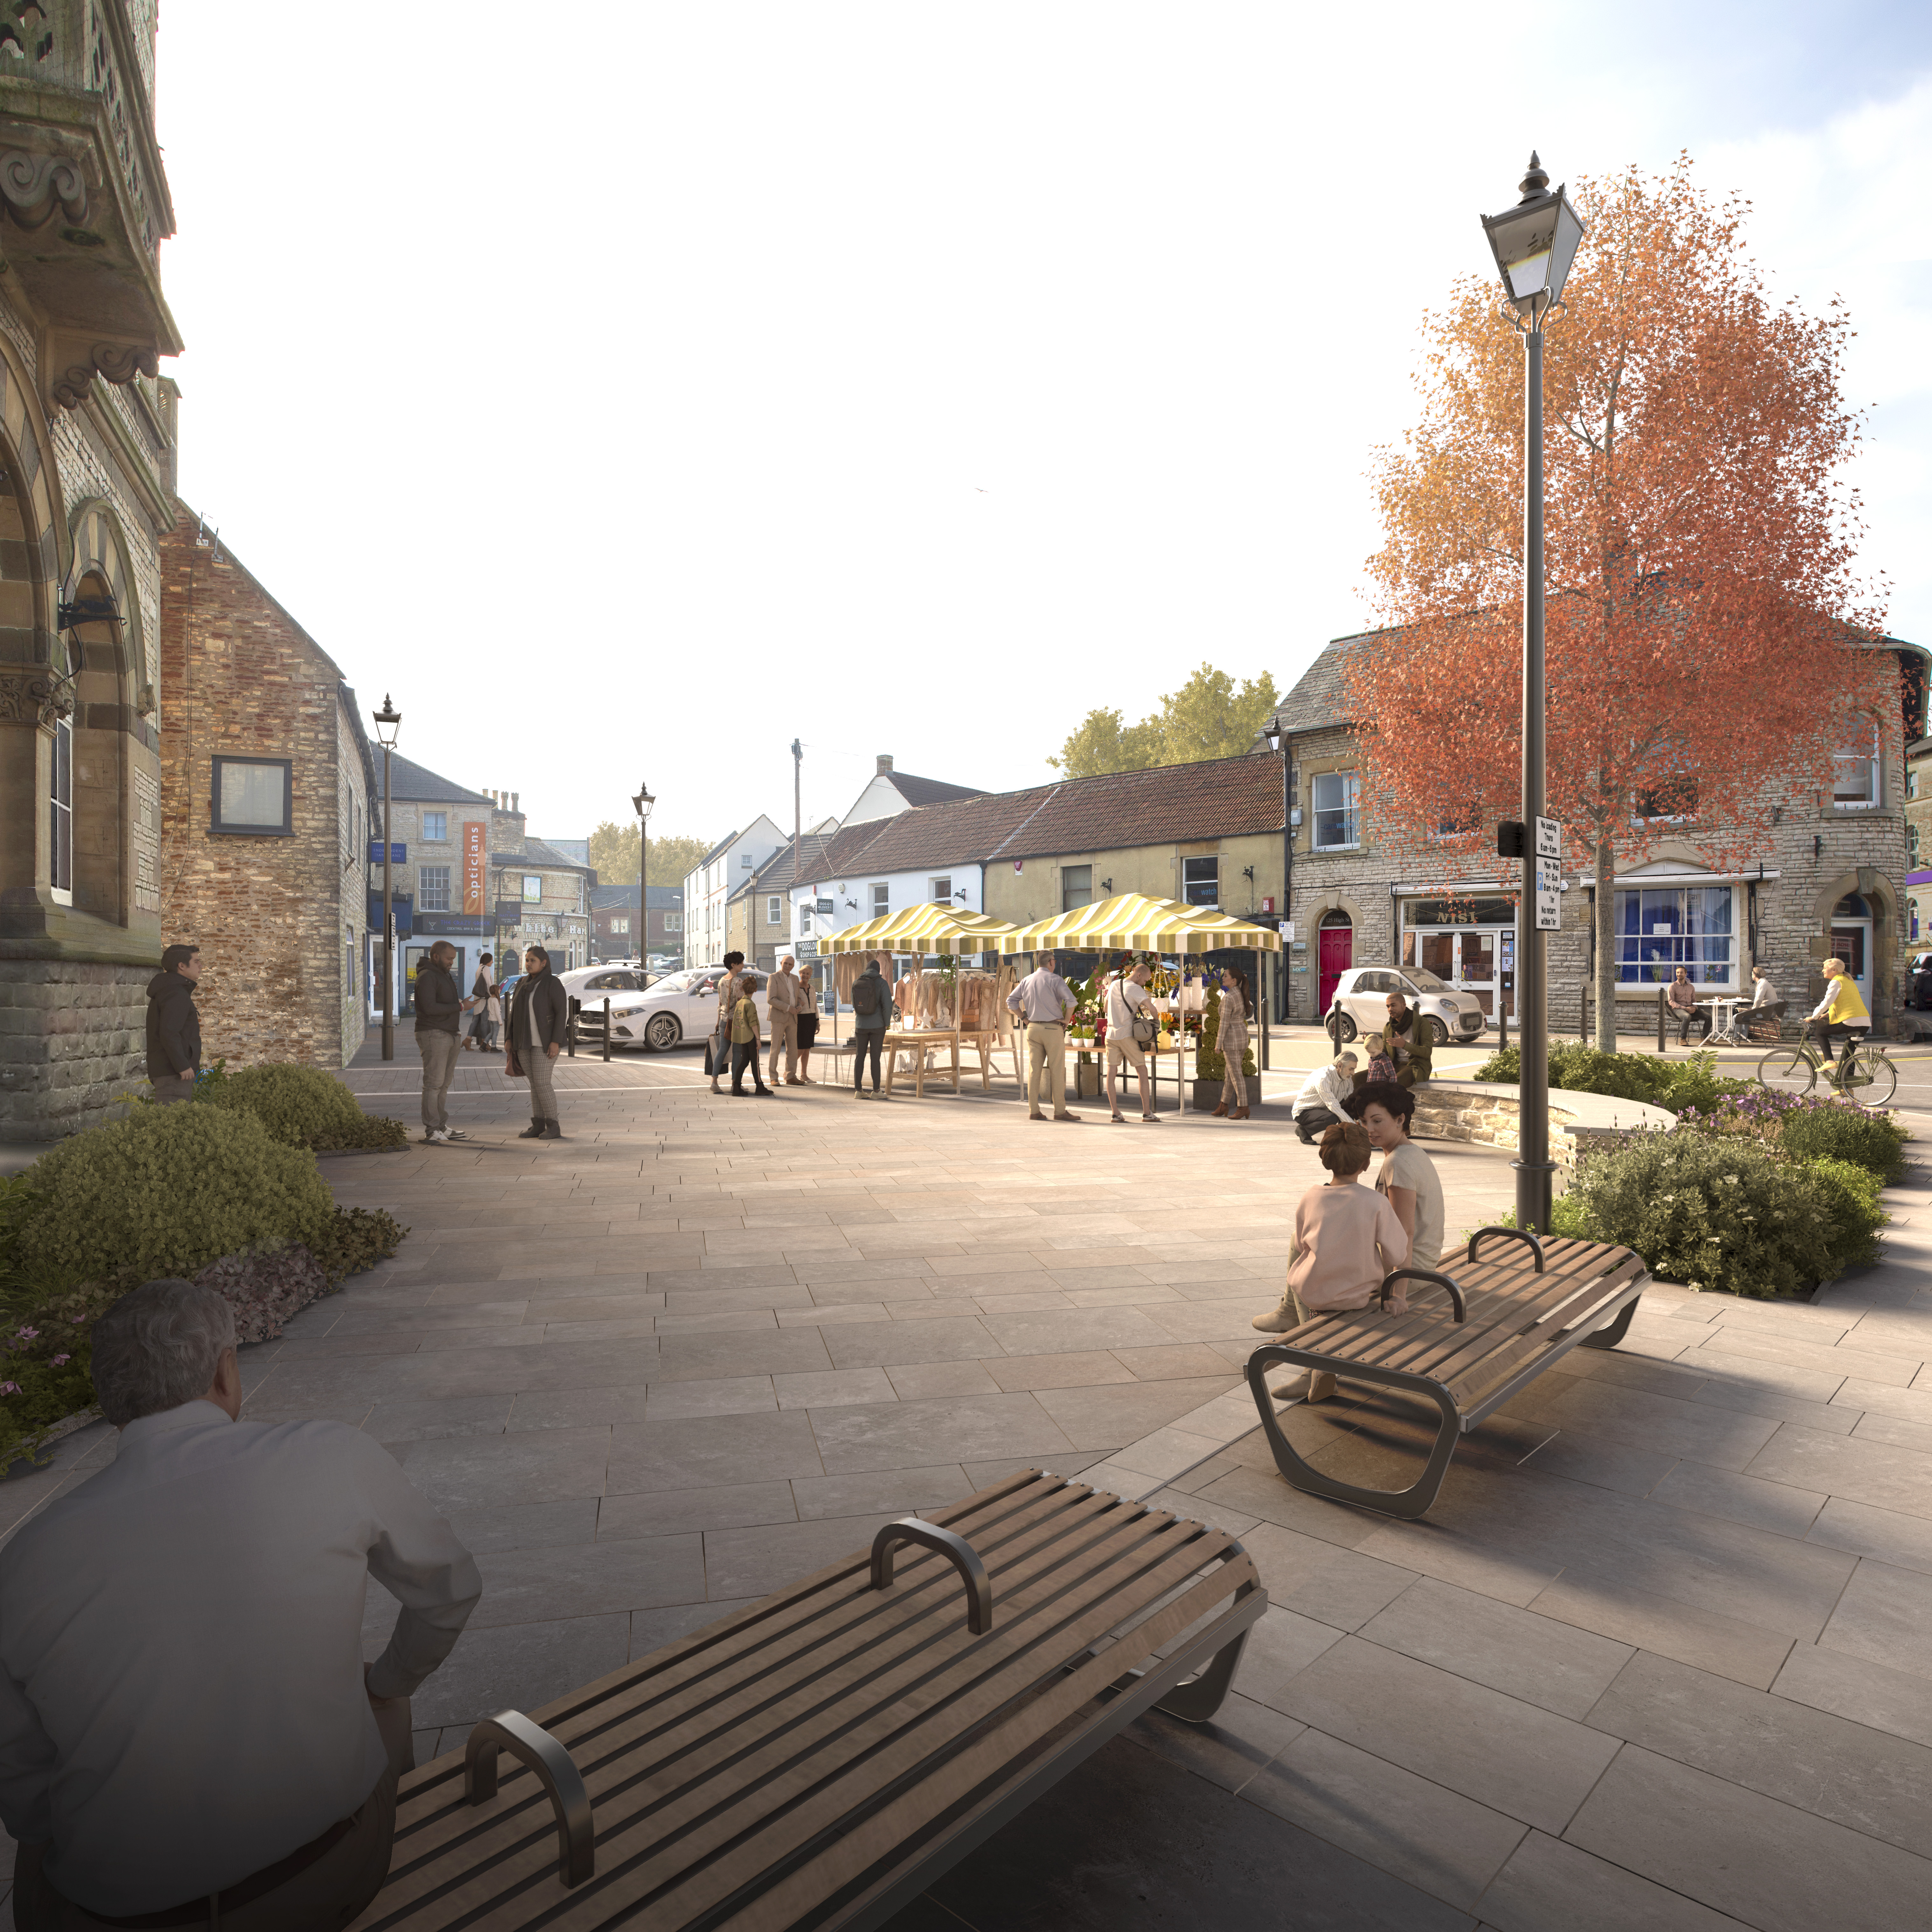 CGI image of Midsomer Norton Market Square set up with a market